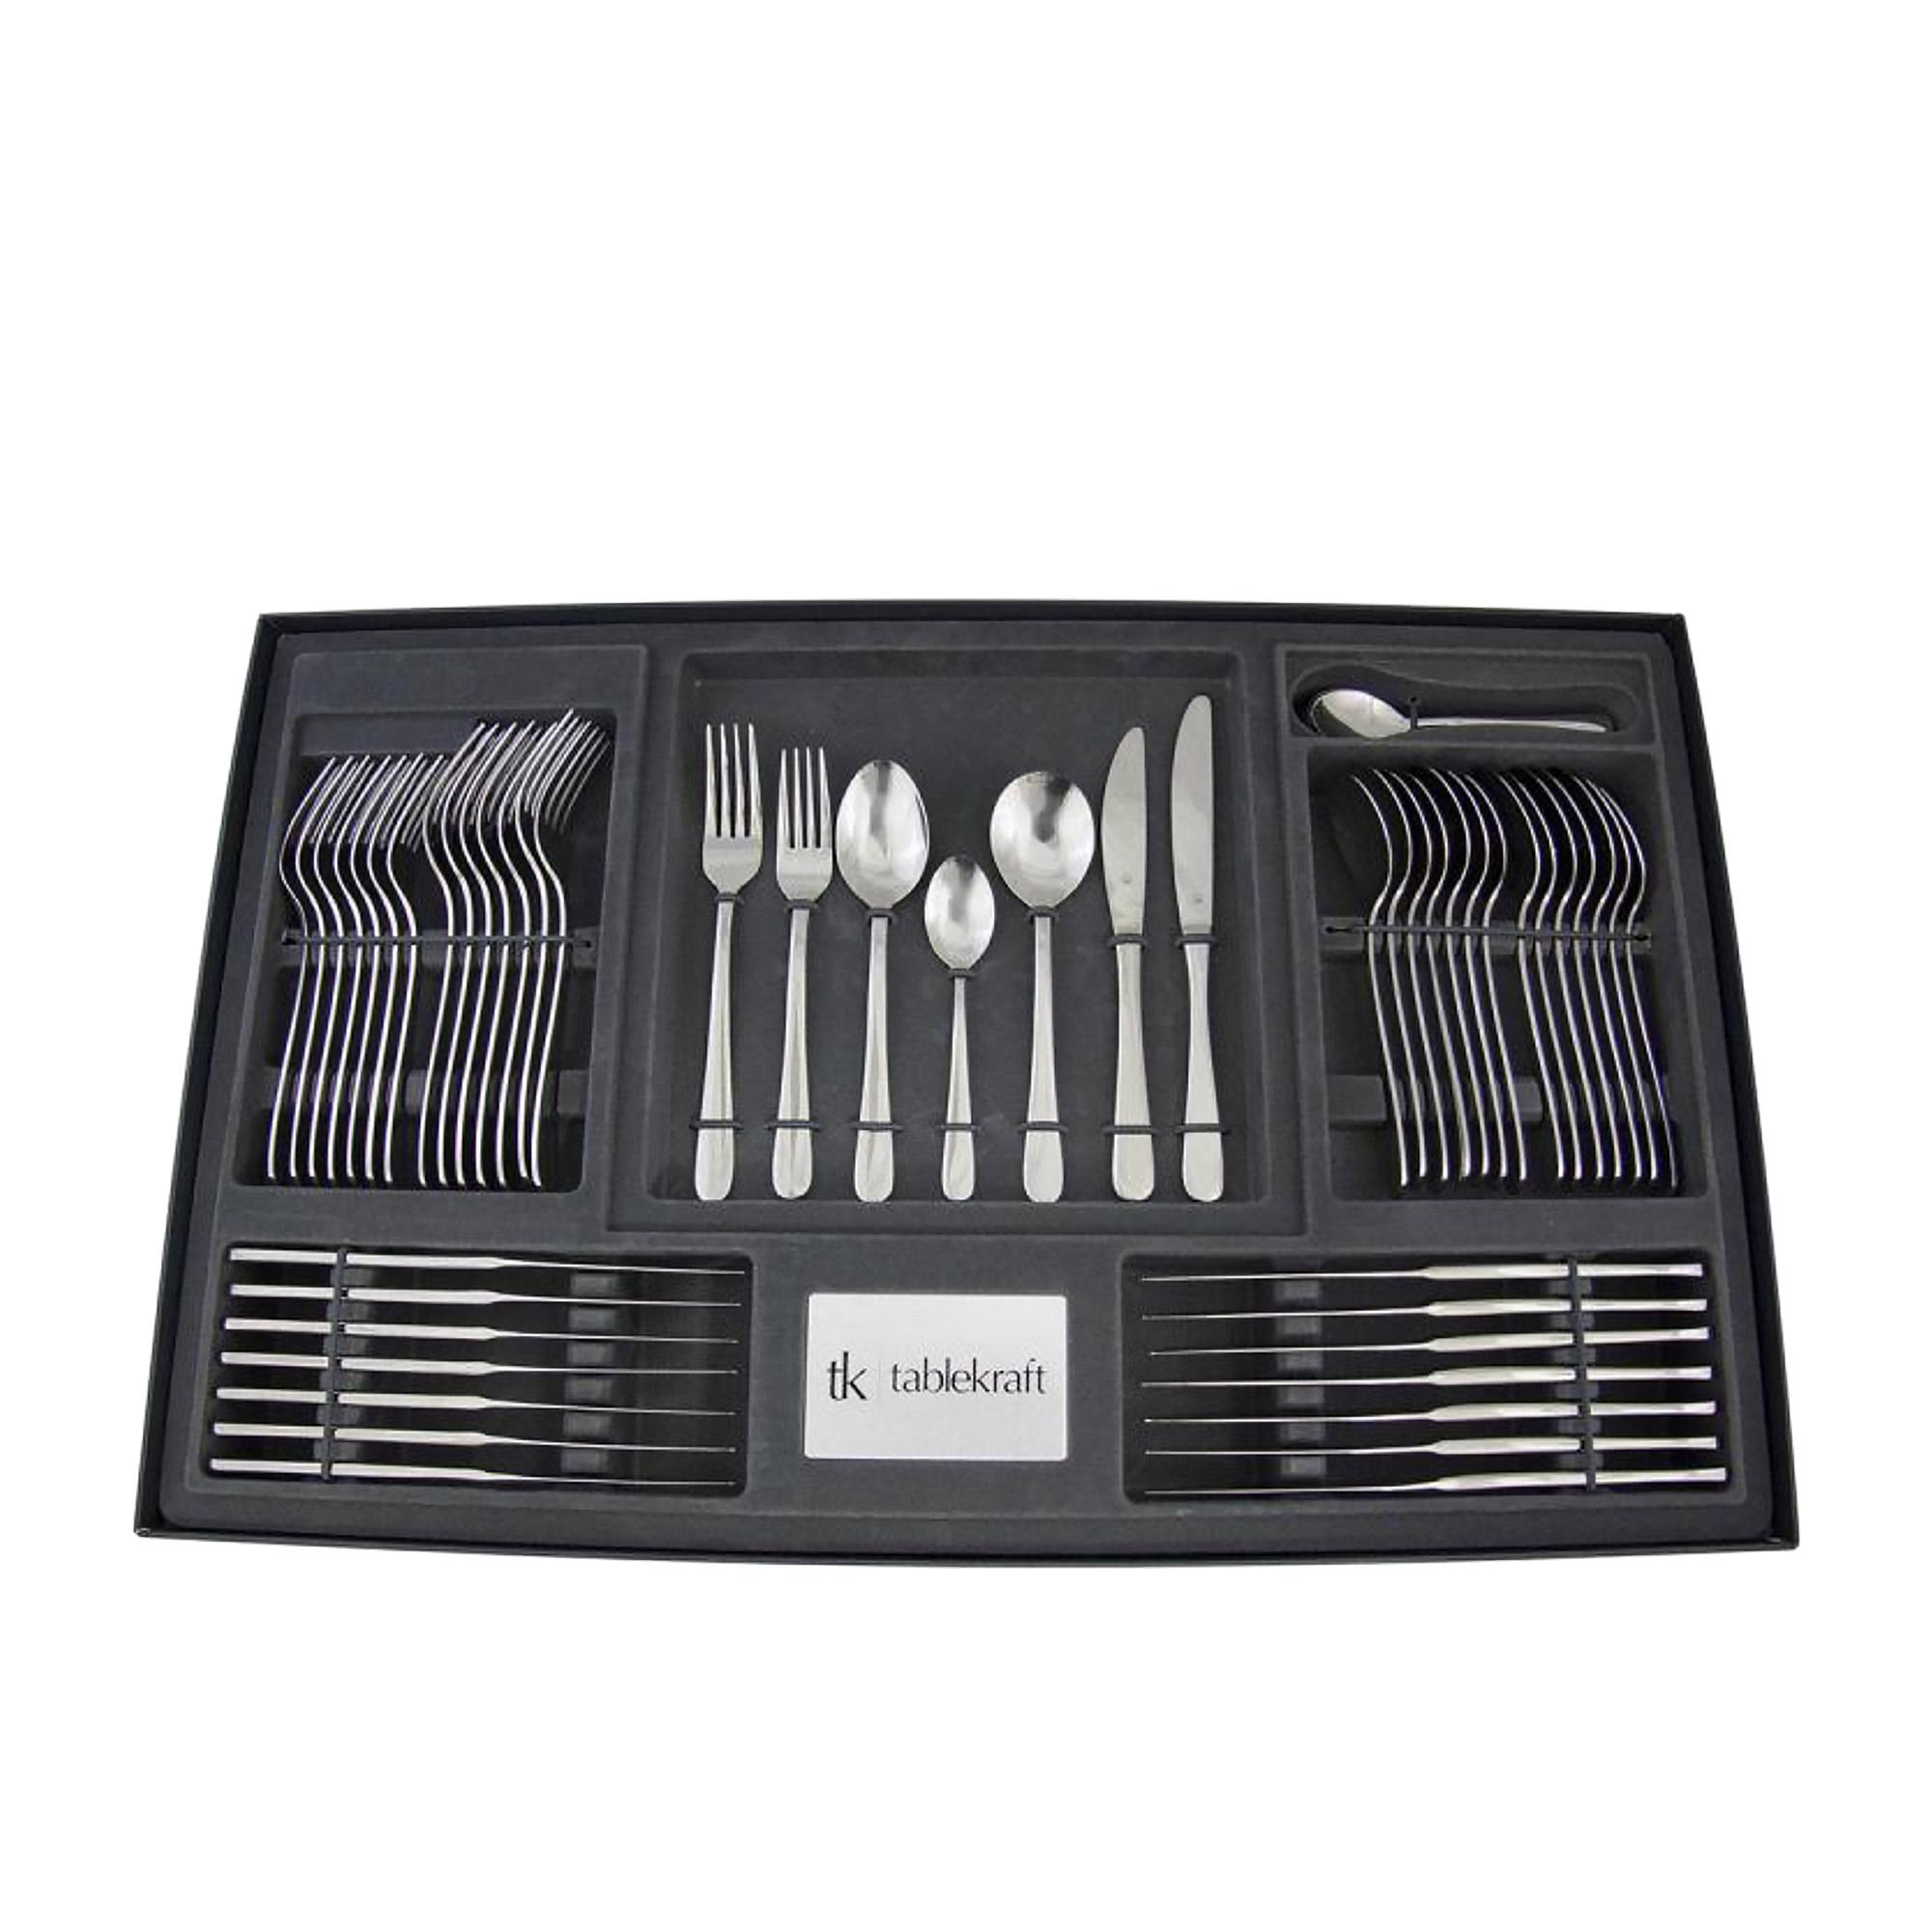 Tablekraft Luxor Cutlery Set 56pc Image 3